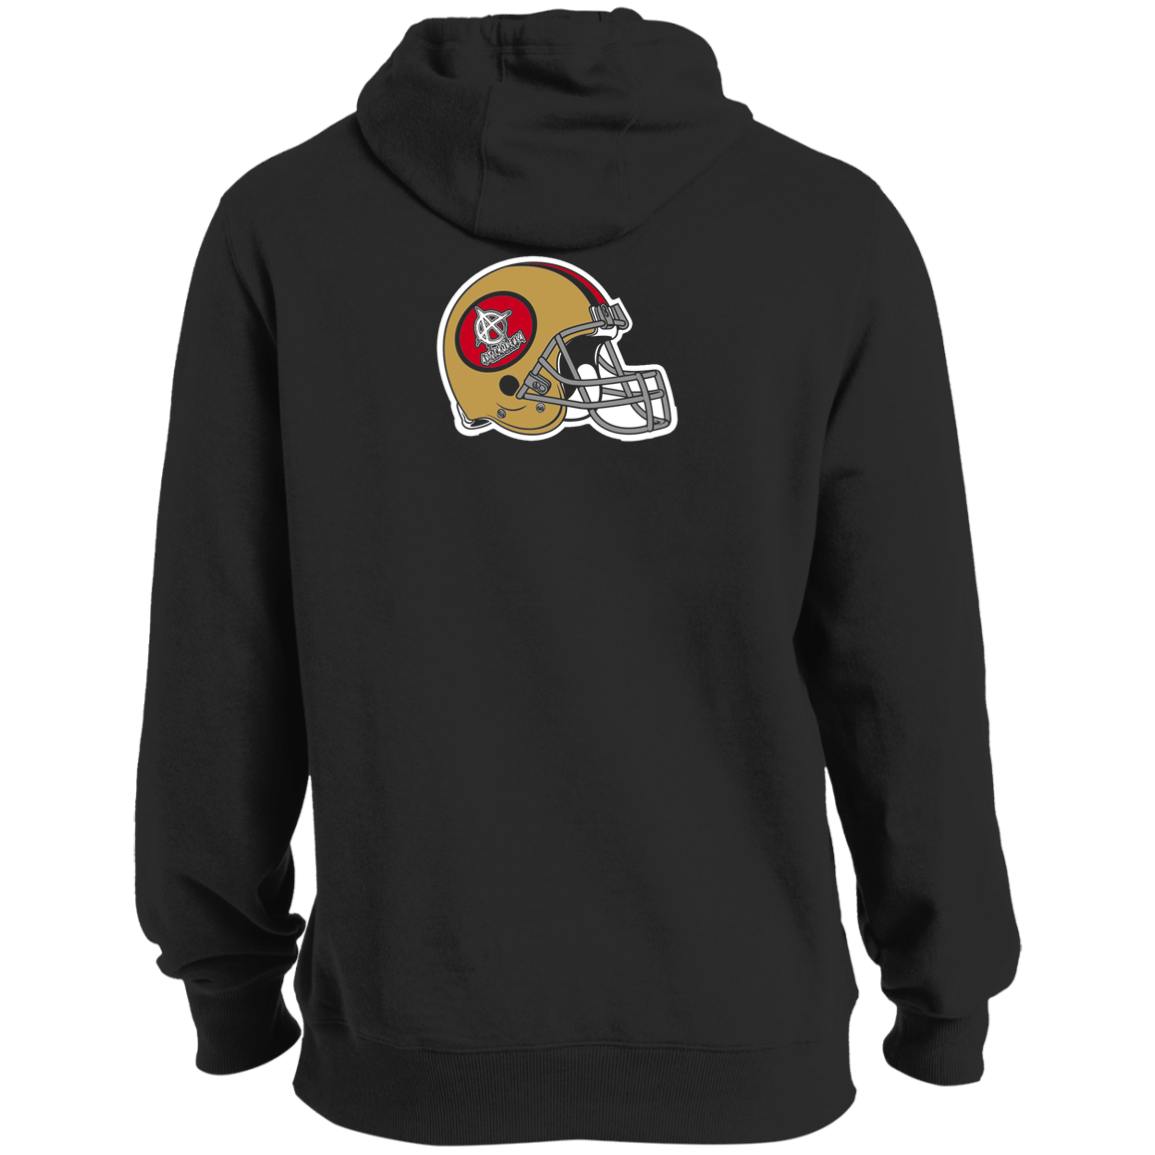 ArtichokeUSA Custom Design #50. 9ers Love. SF 49ers Fan Art. Let's Make Your Own Custom Team Shirt. Ultra Soft Pullover Hoodie